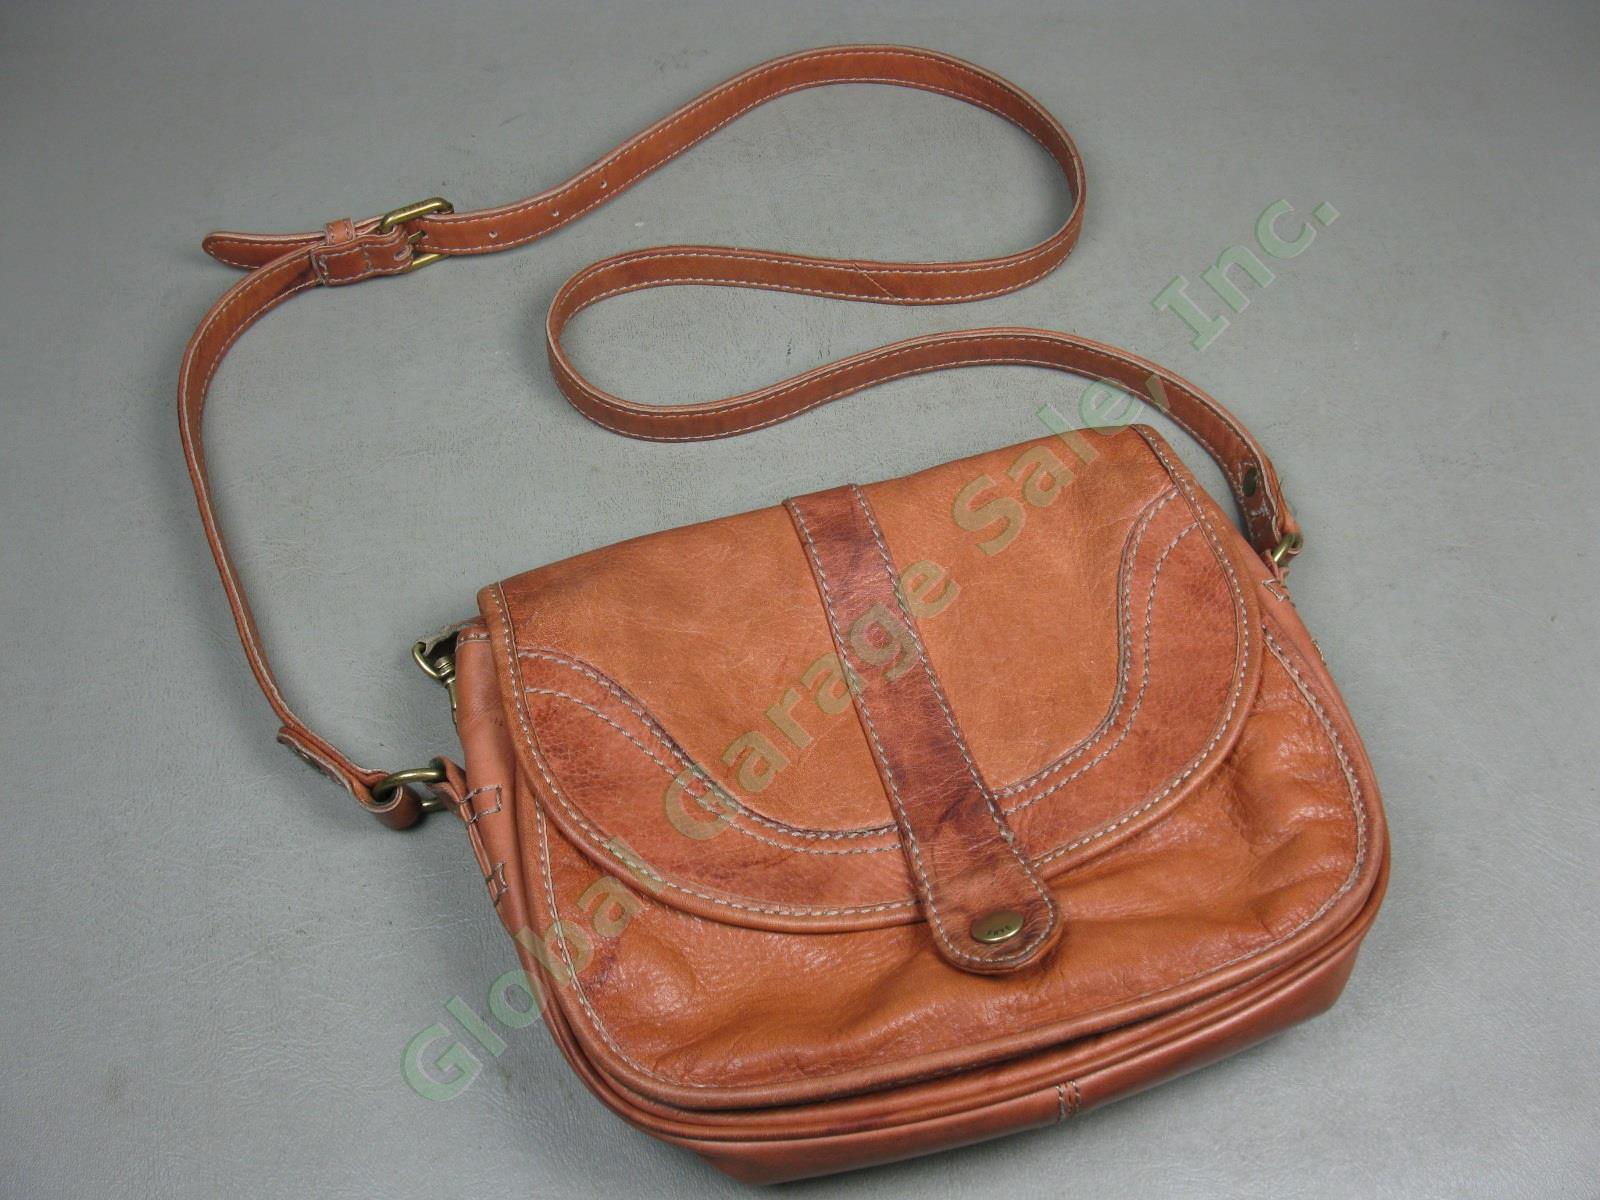 Frye Campus Saddle Cross Body Leather Handbag Clutch DB891 $298 Retail NORESERVE